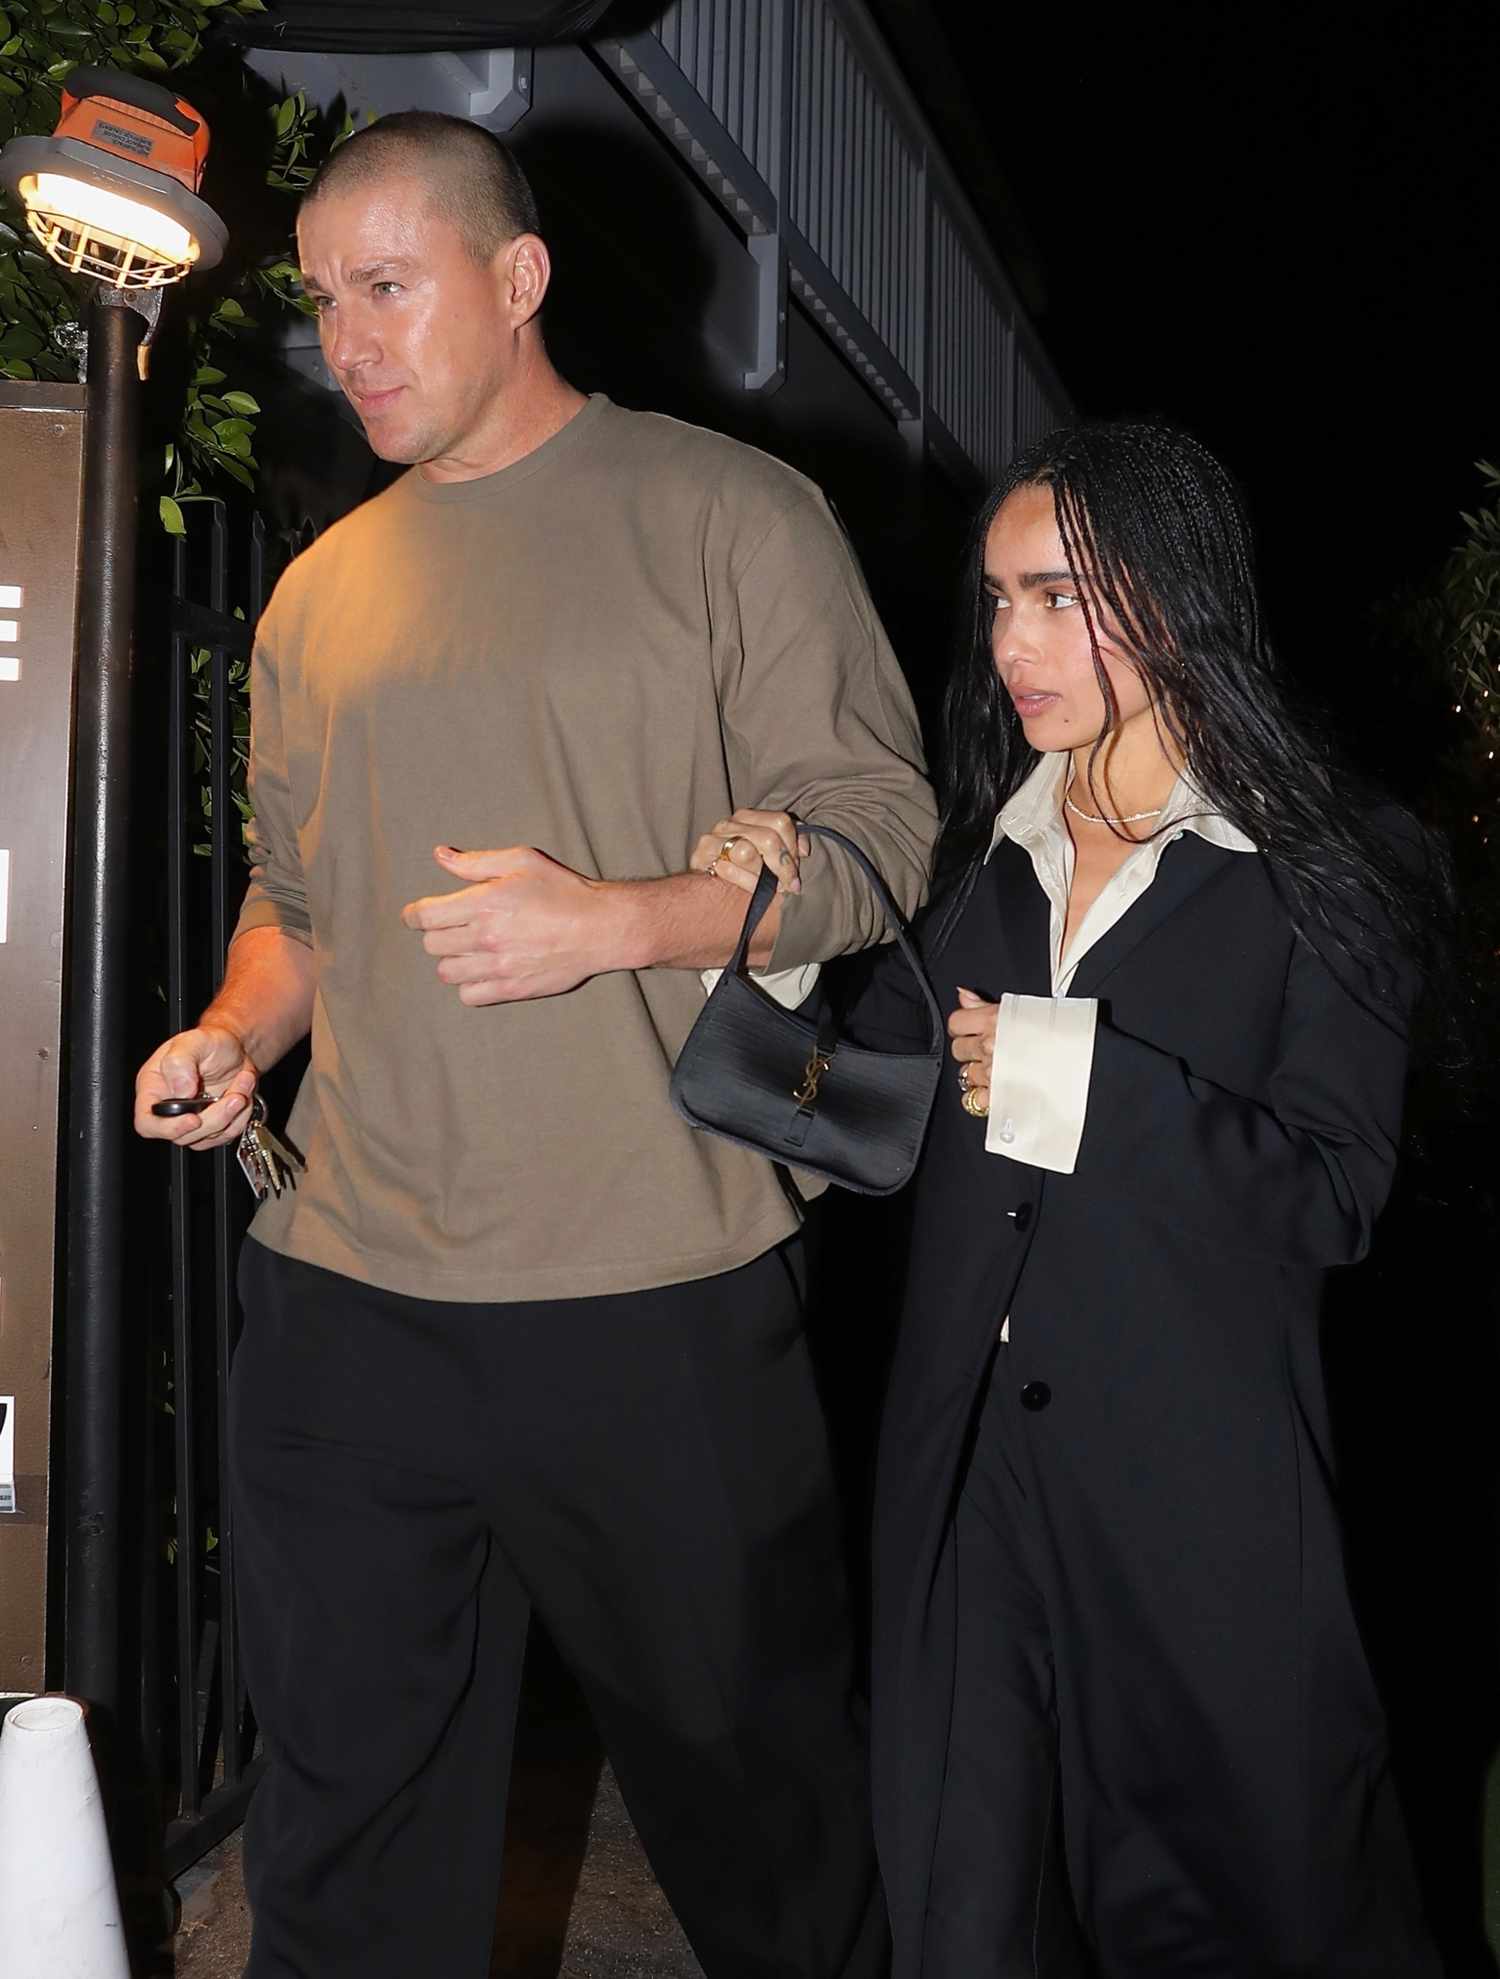 Couple Channing Tatum and ZoÃÂ« Kravitz, recently engaged, were spotted heading home after enjoying date night at Giorgio Baldi restaurant in Los Angeles.